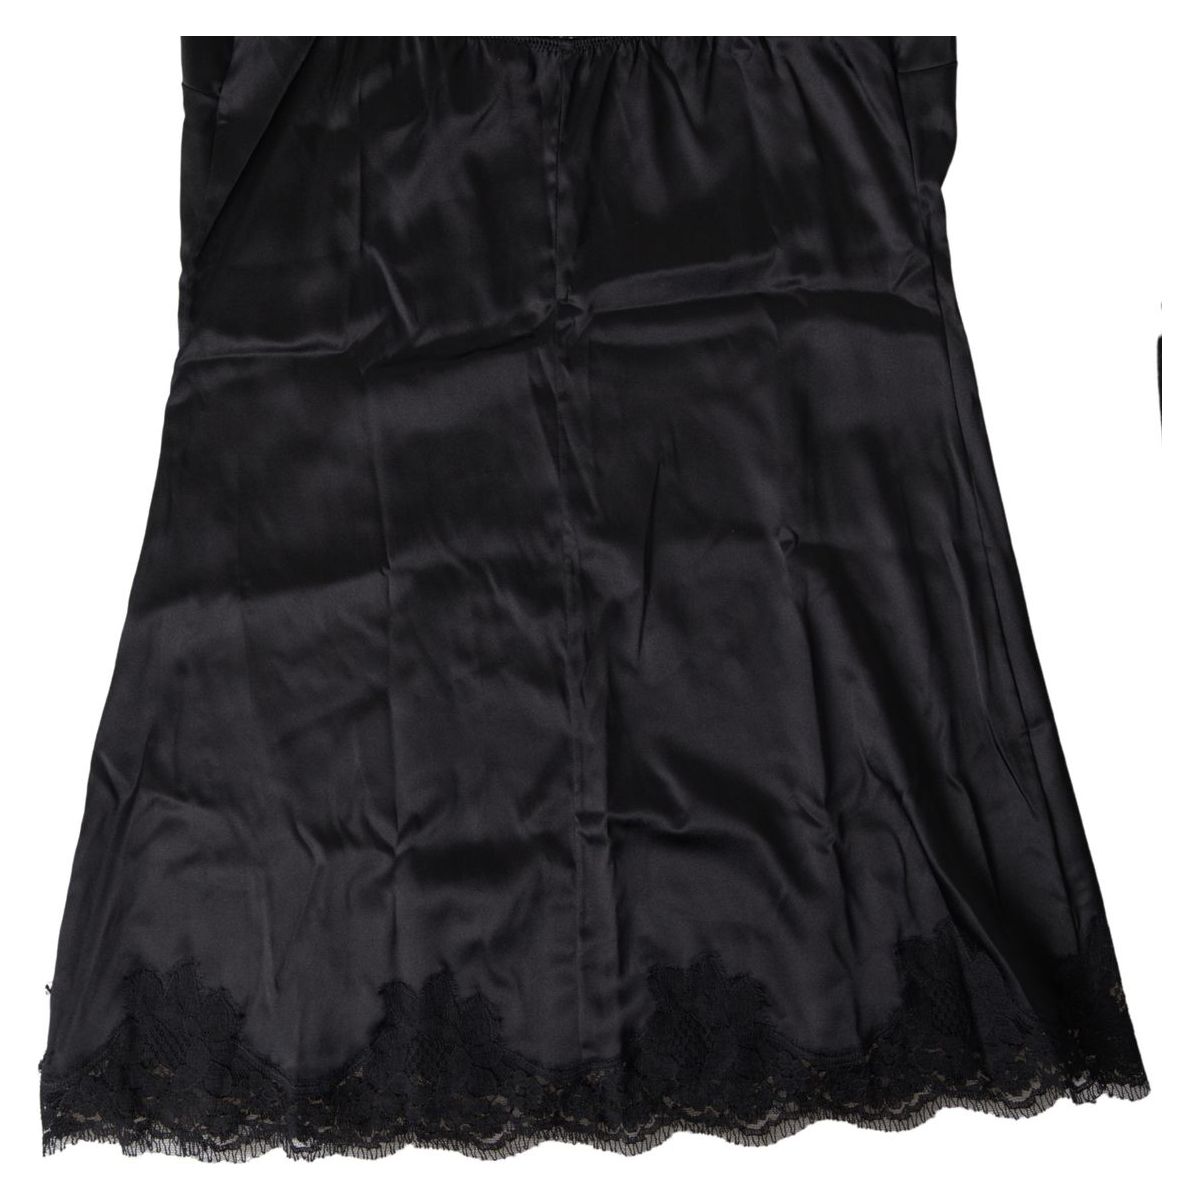 Dolce & Gabbana Sultry Black Silk Camisole Top black-lace-silk-sleepwear-camisole-top-underwear